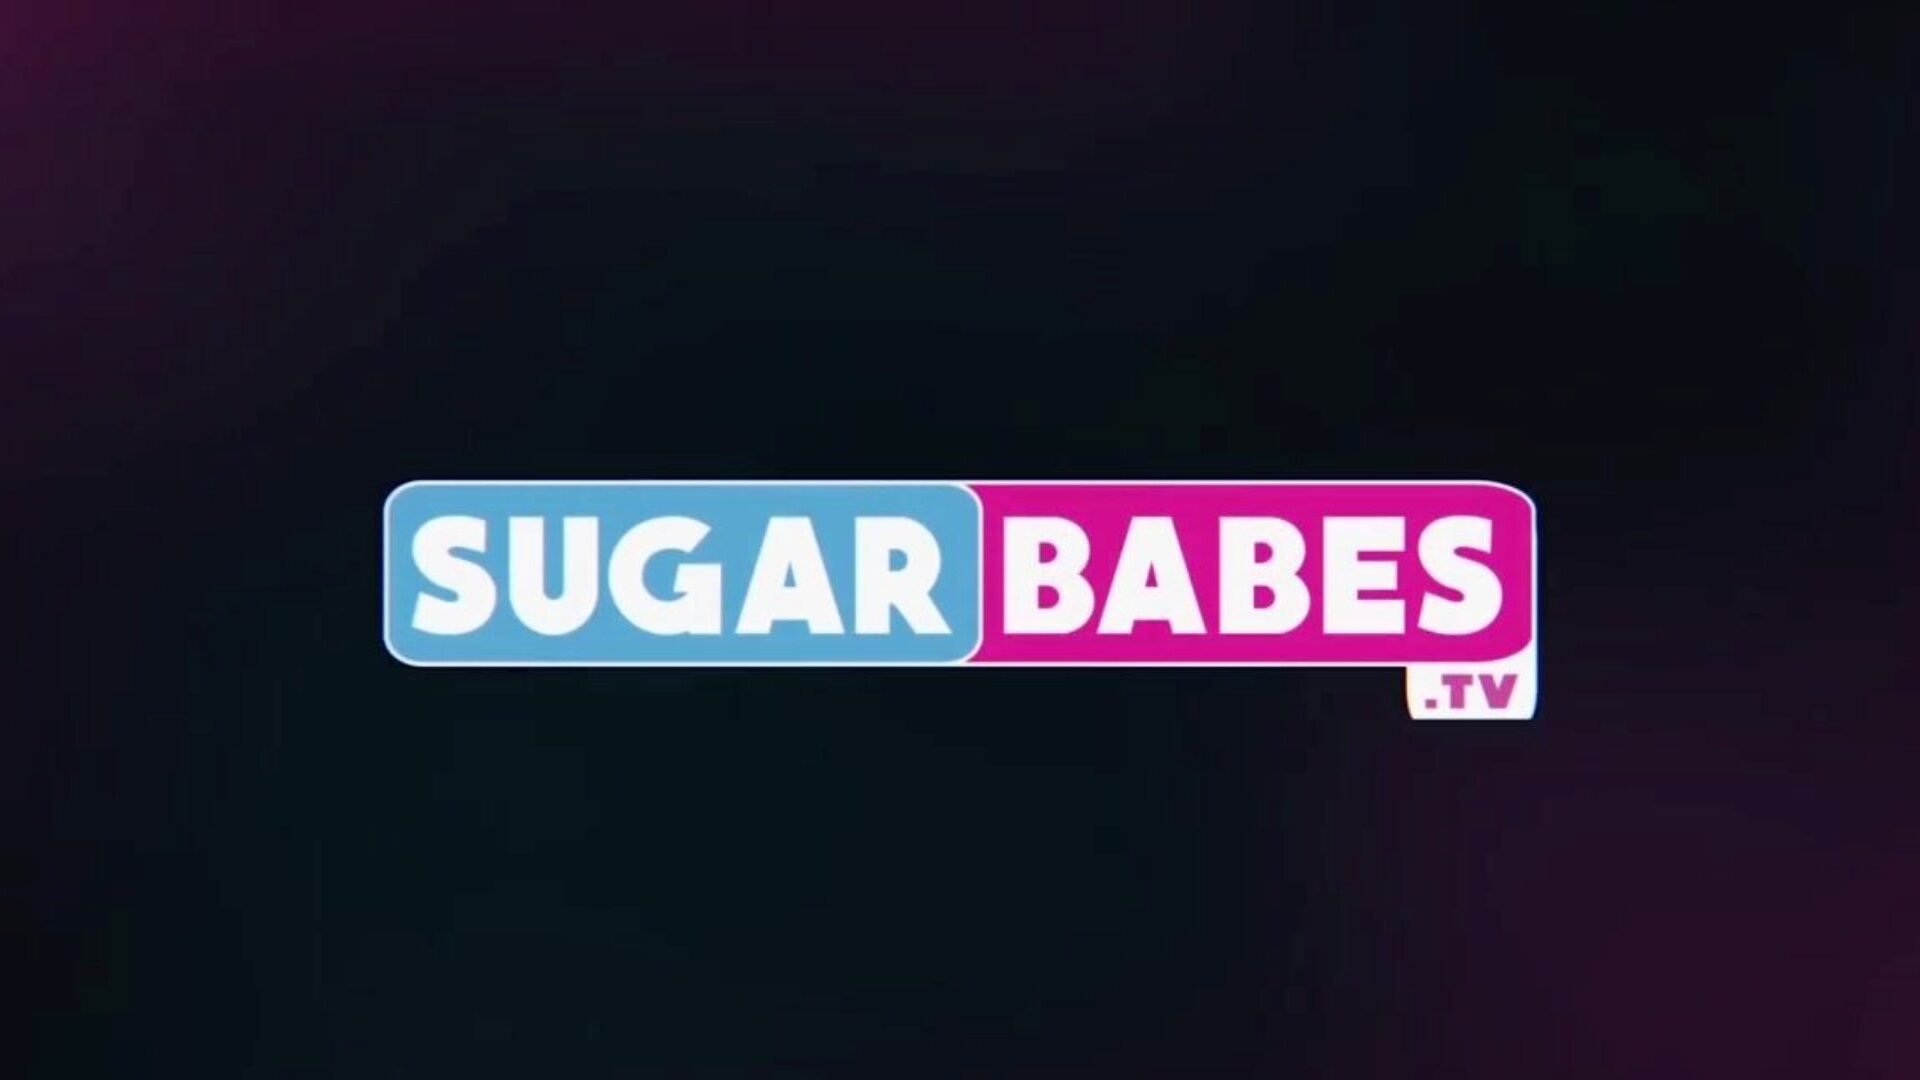 sugarbabestv το μπουκάλι, δωρεάν ζάχαρη μέλι tv hd porn 6b παρακολουθήστε το sugarbabestv το μπουκάλι βίντεο στο xhamster, τον καλύτερο ιστότοπο HD Lovemaking Tube με τόνους δωρεάν ζάχαρης babes tv λεσβιακό σεξ & αγάπη βίντεο πορνογραφίας